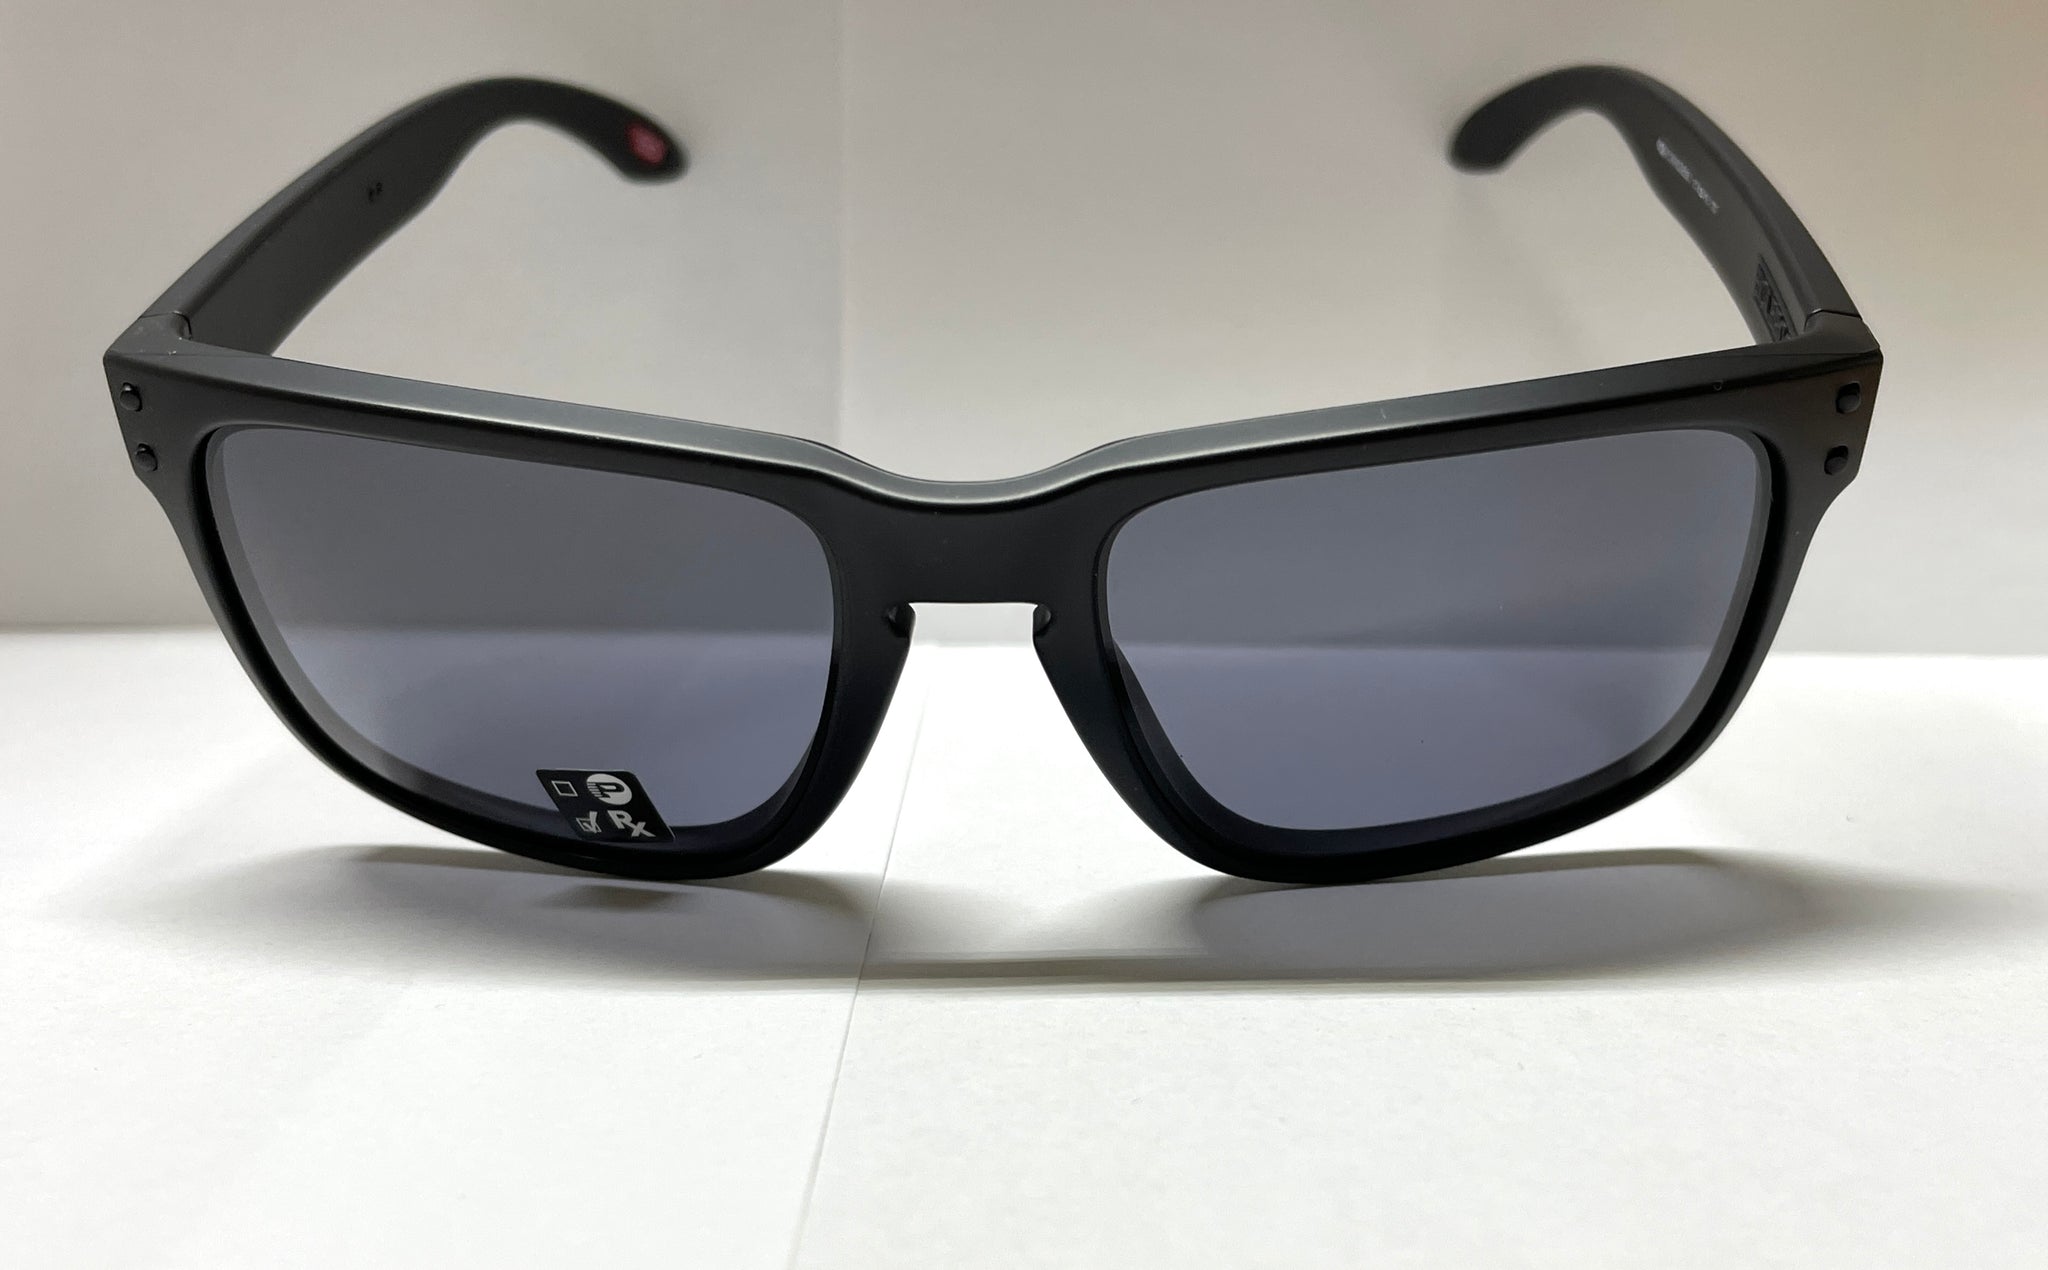 Oakley Holbrook USA Colored Flag Sunglasses - Matte Black / Grey